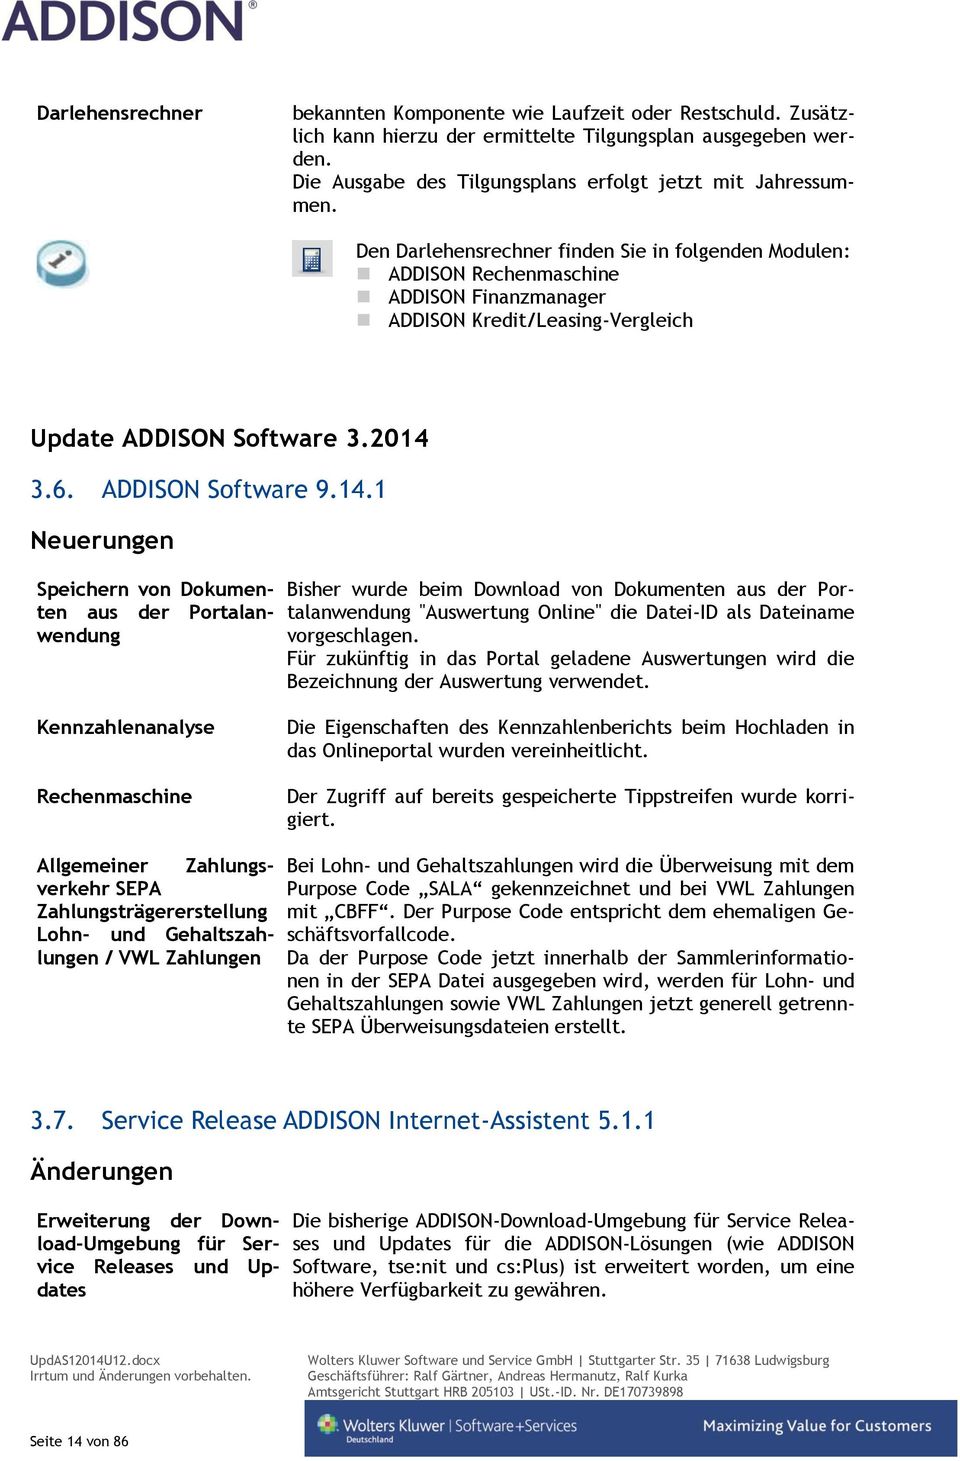 3.6. ADDISON Software 9.14.